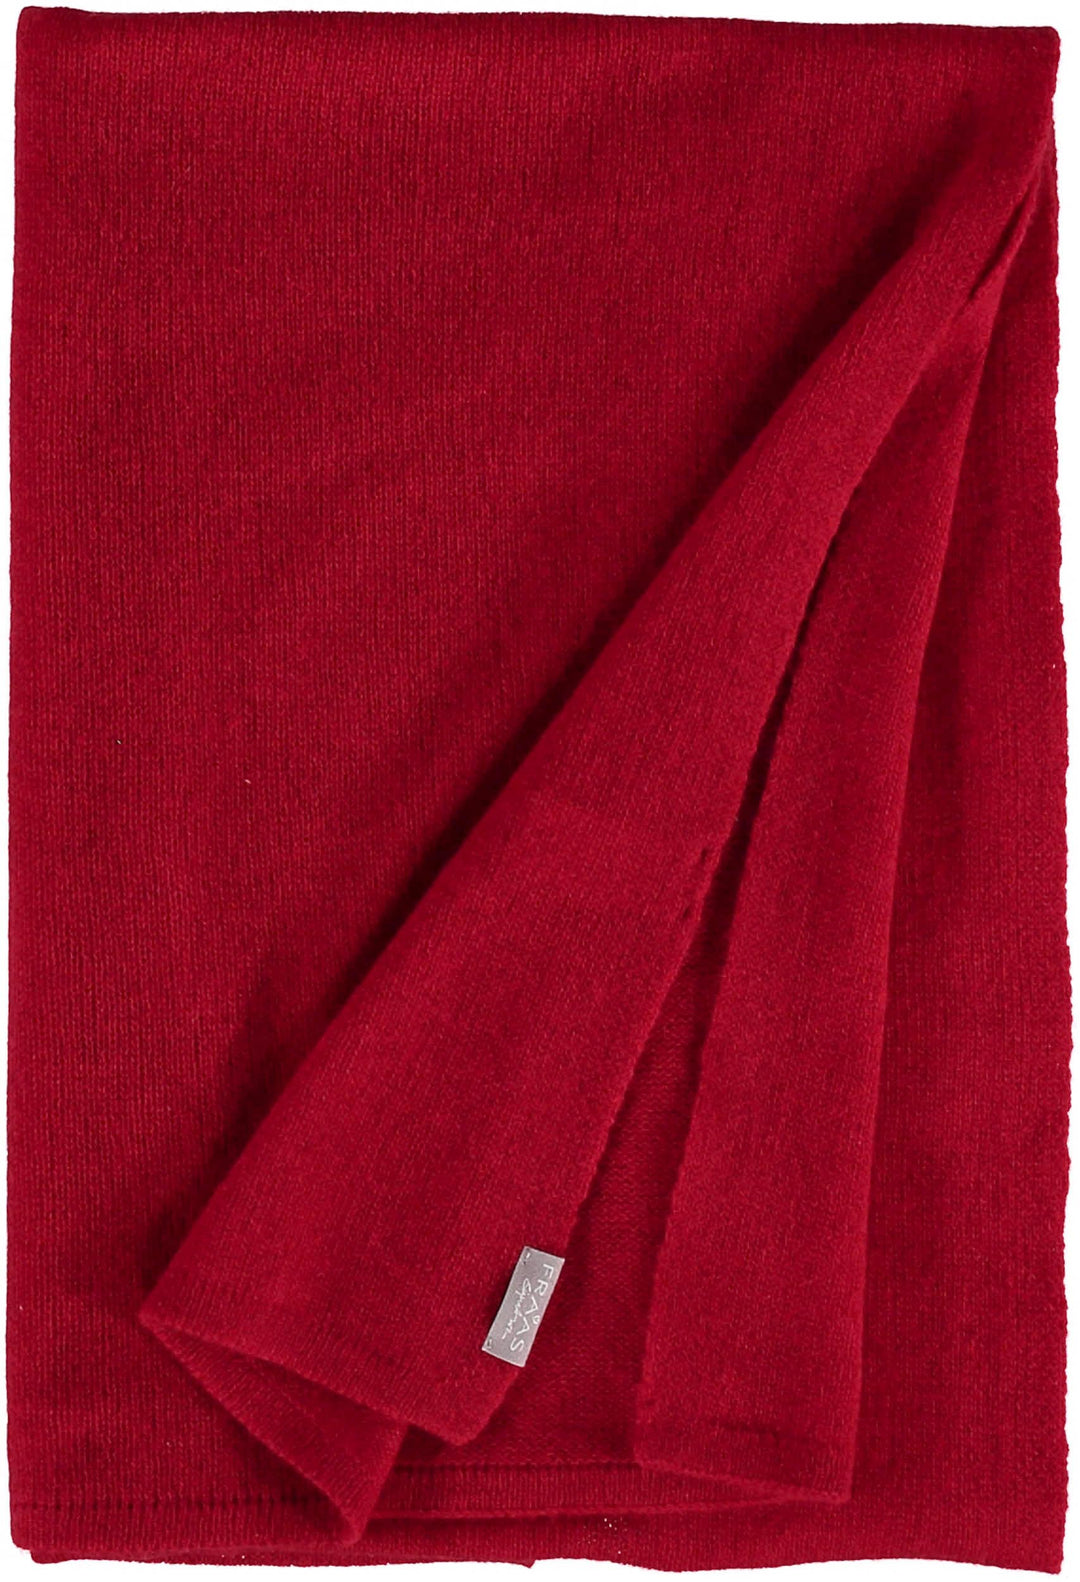 Signature Jersey Knit Cashmere Wrap